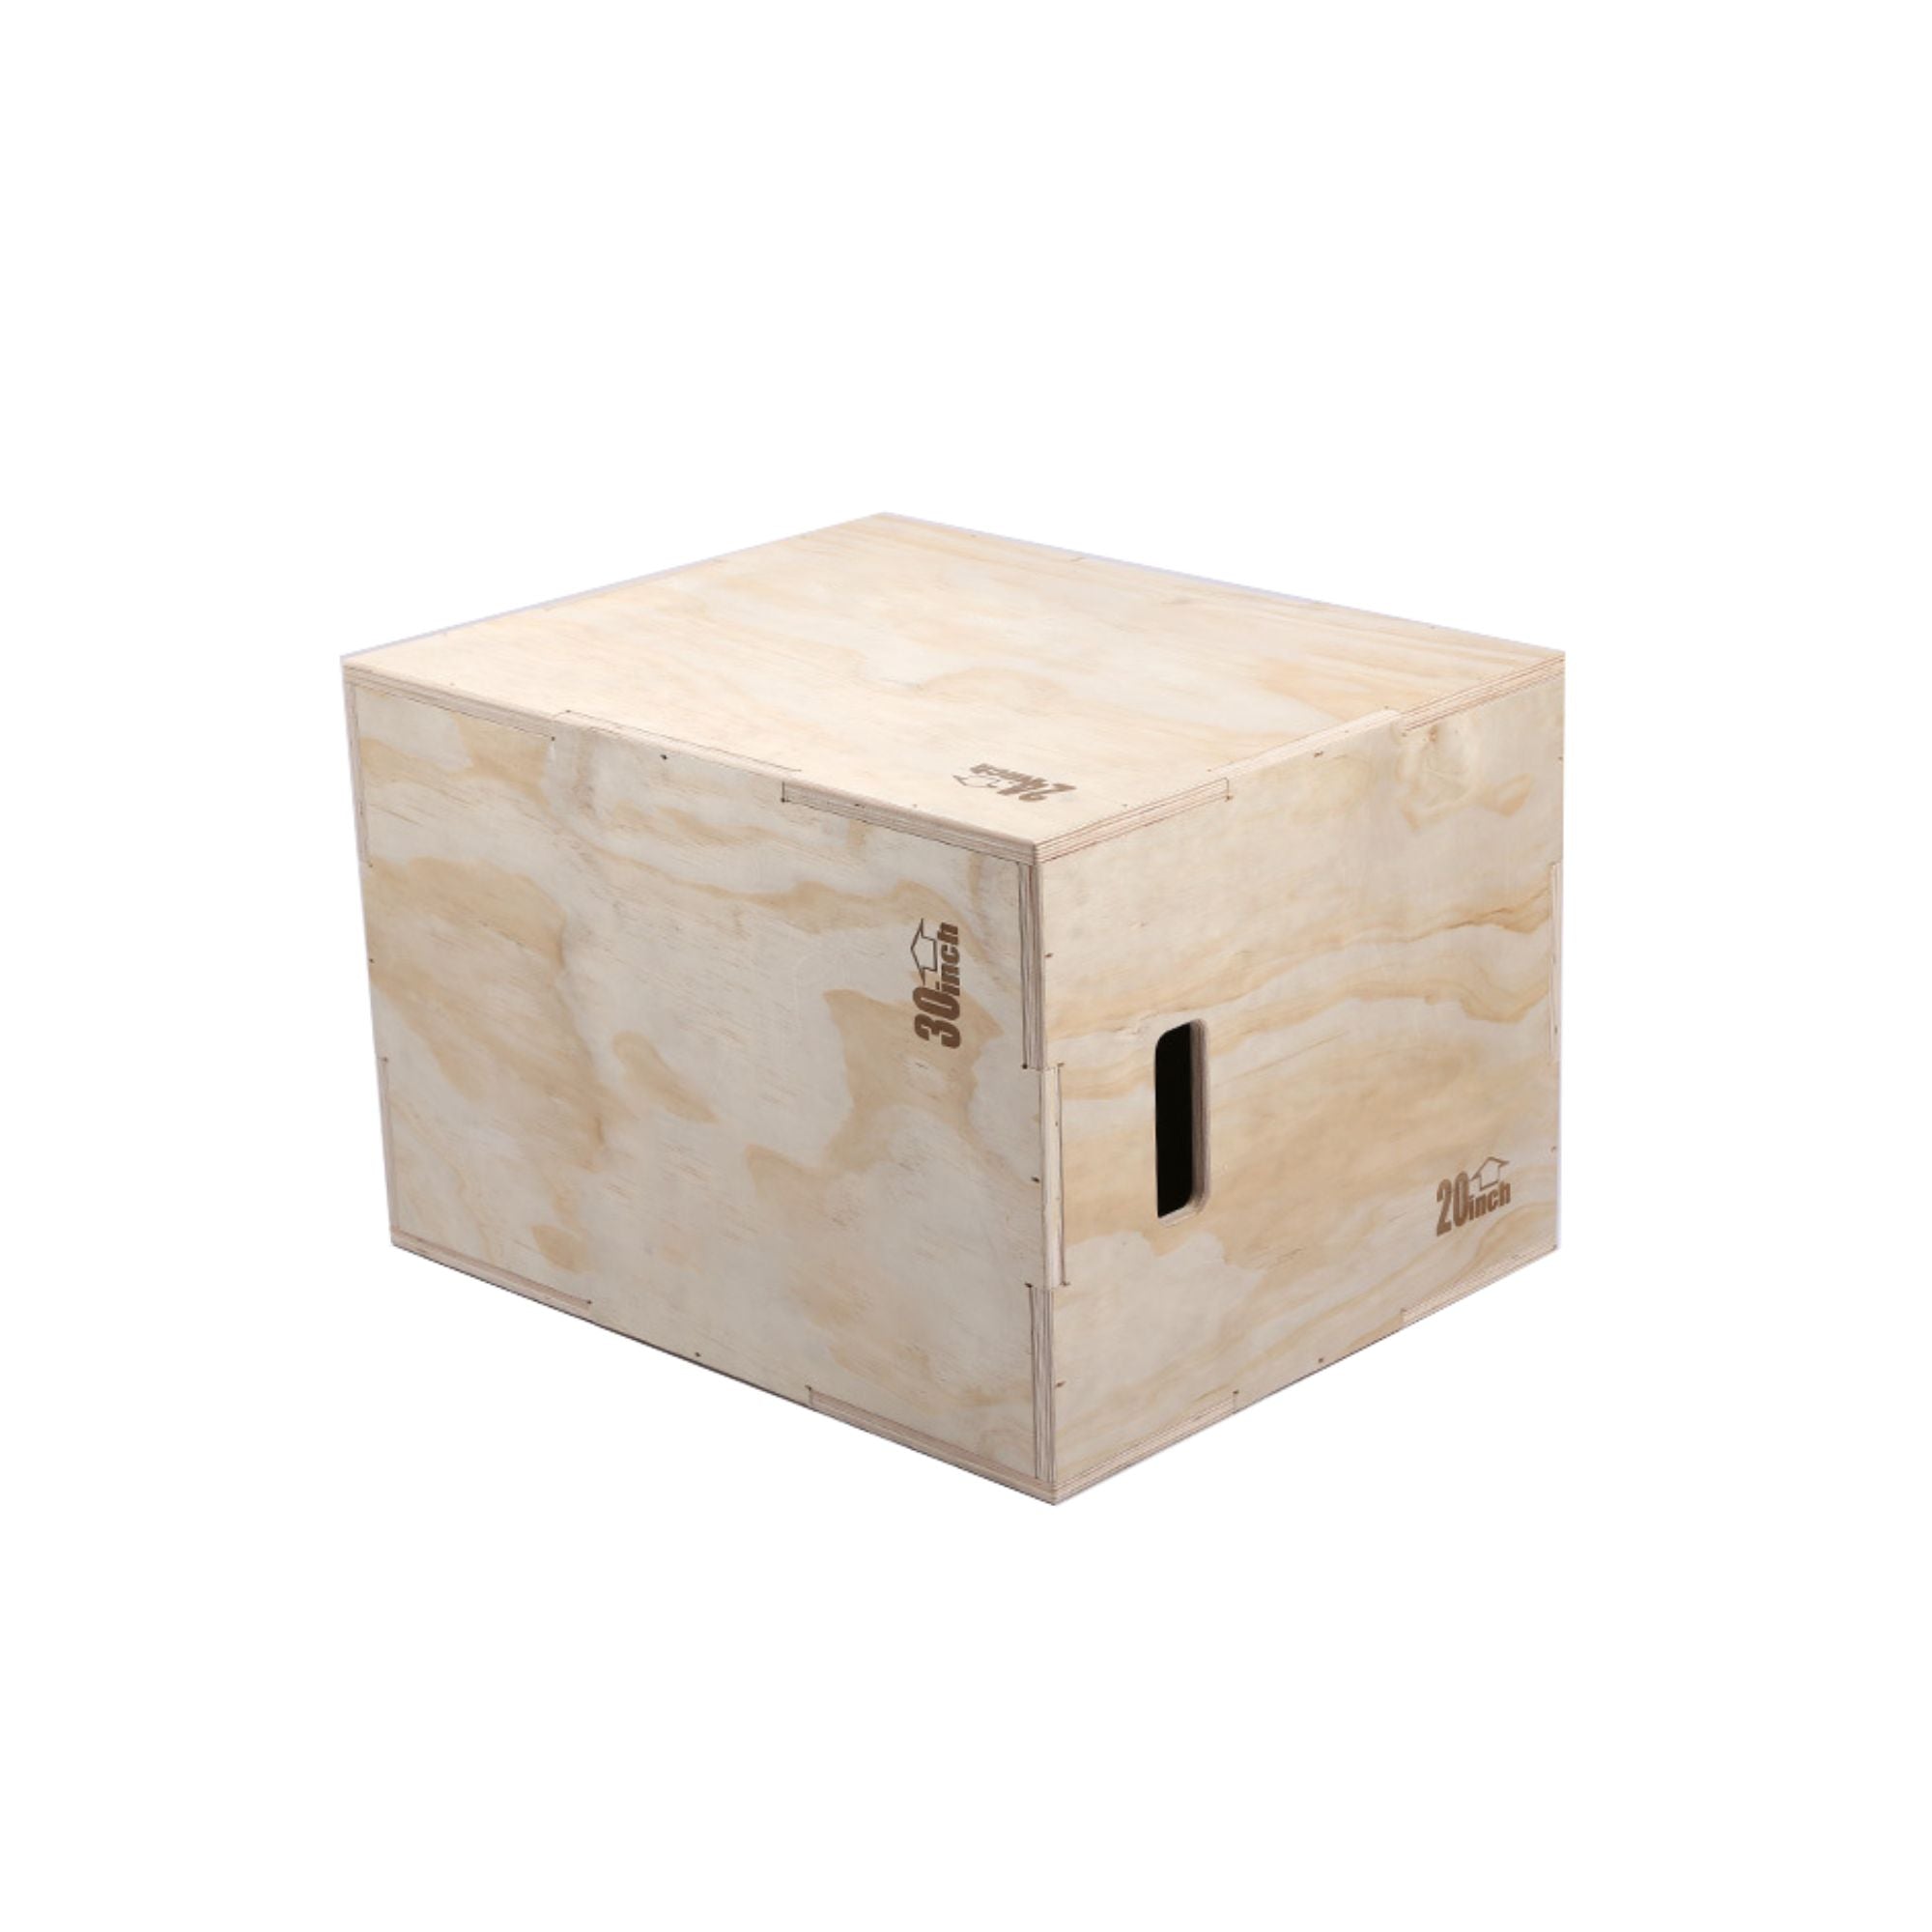 VULCAN 3-in-1 Wooden Plyo Box | IN STOCK